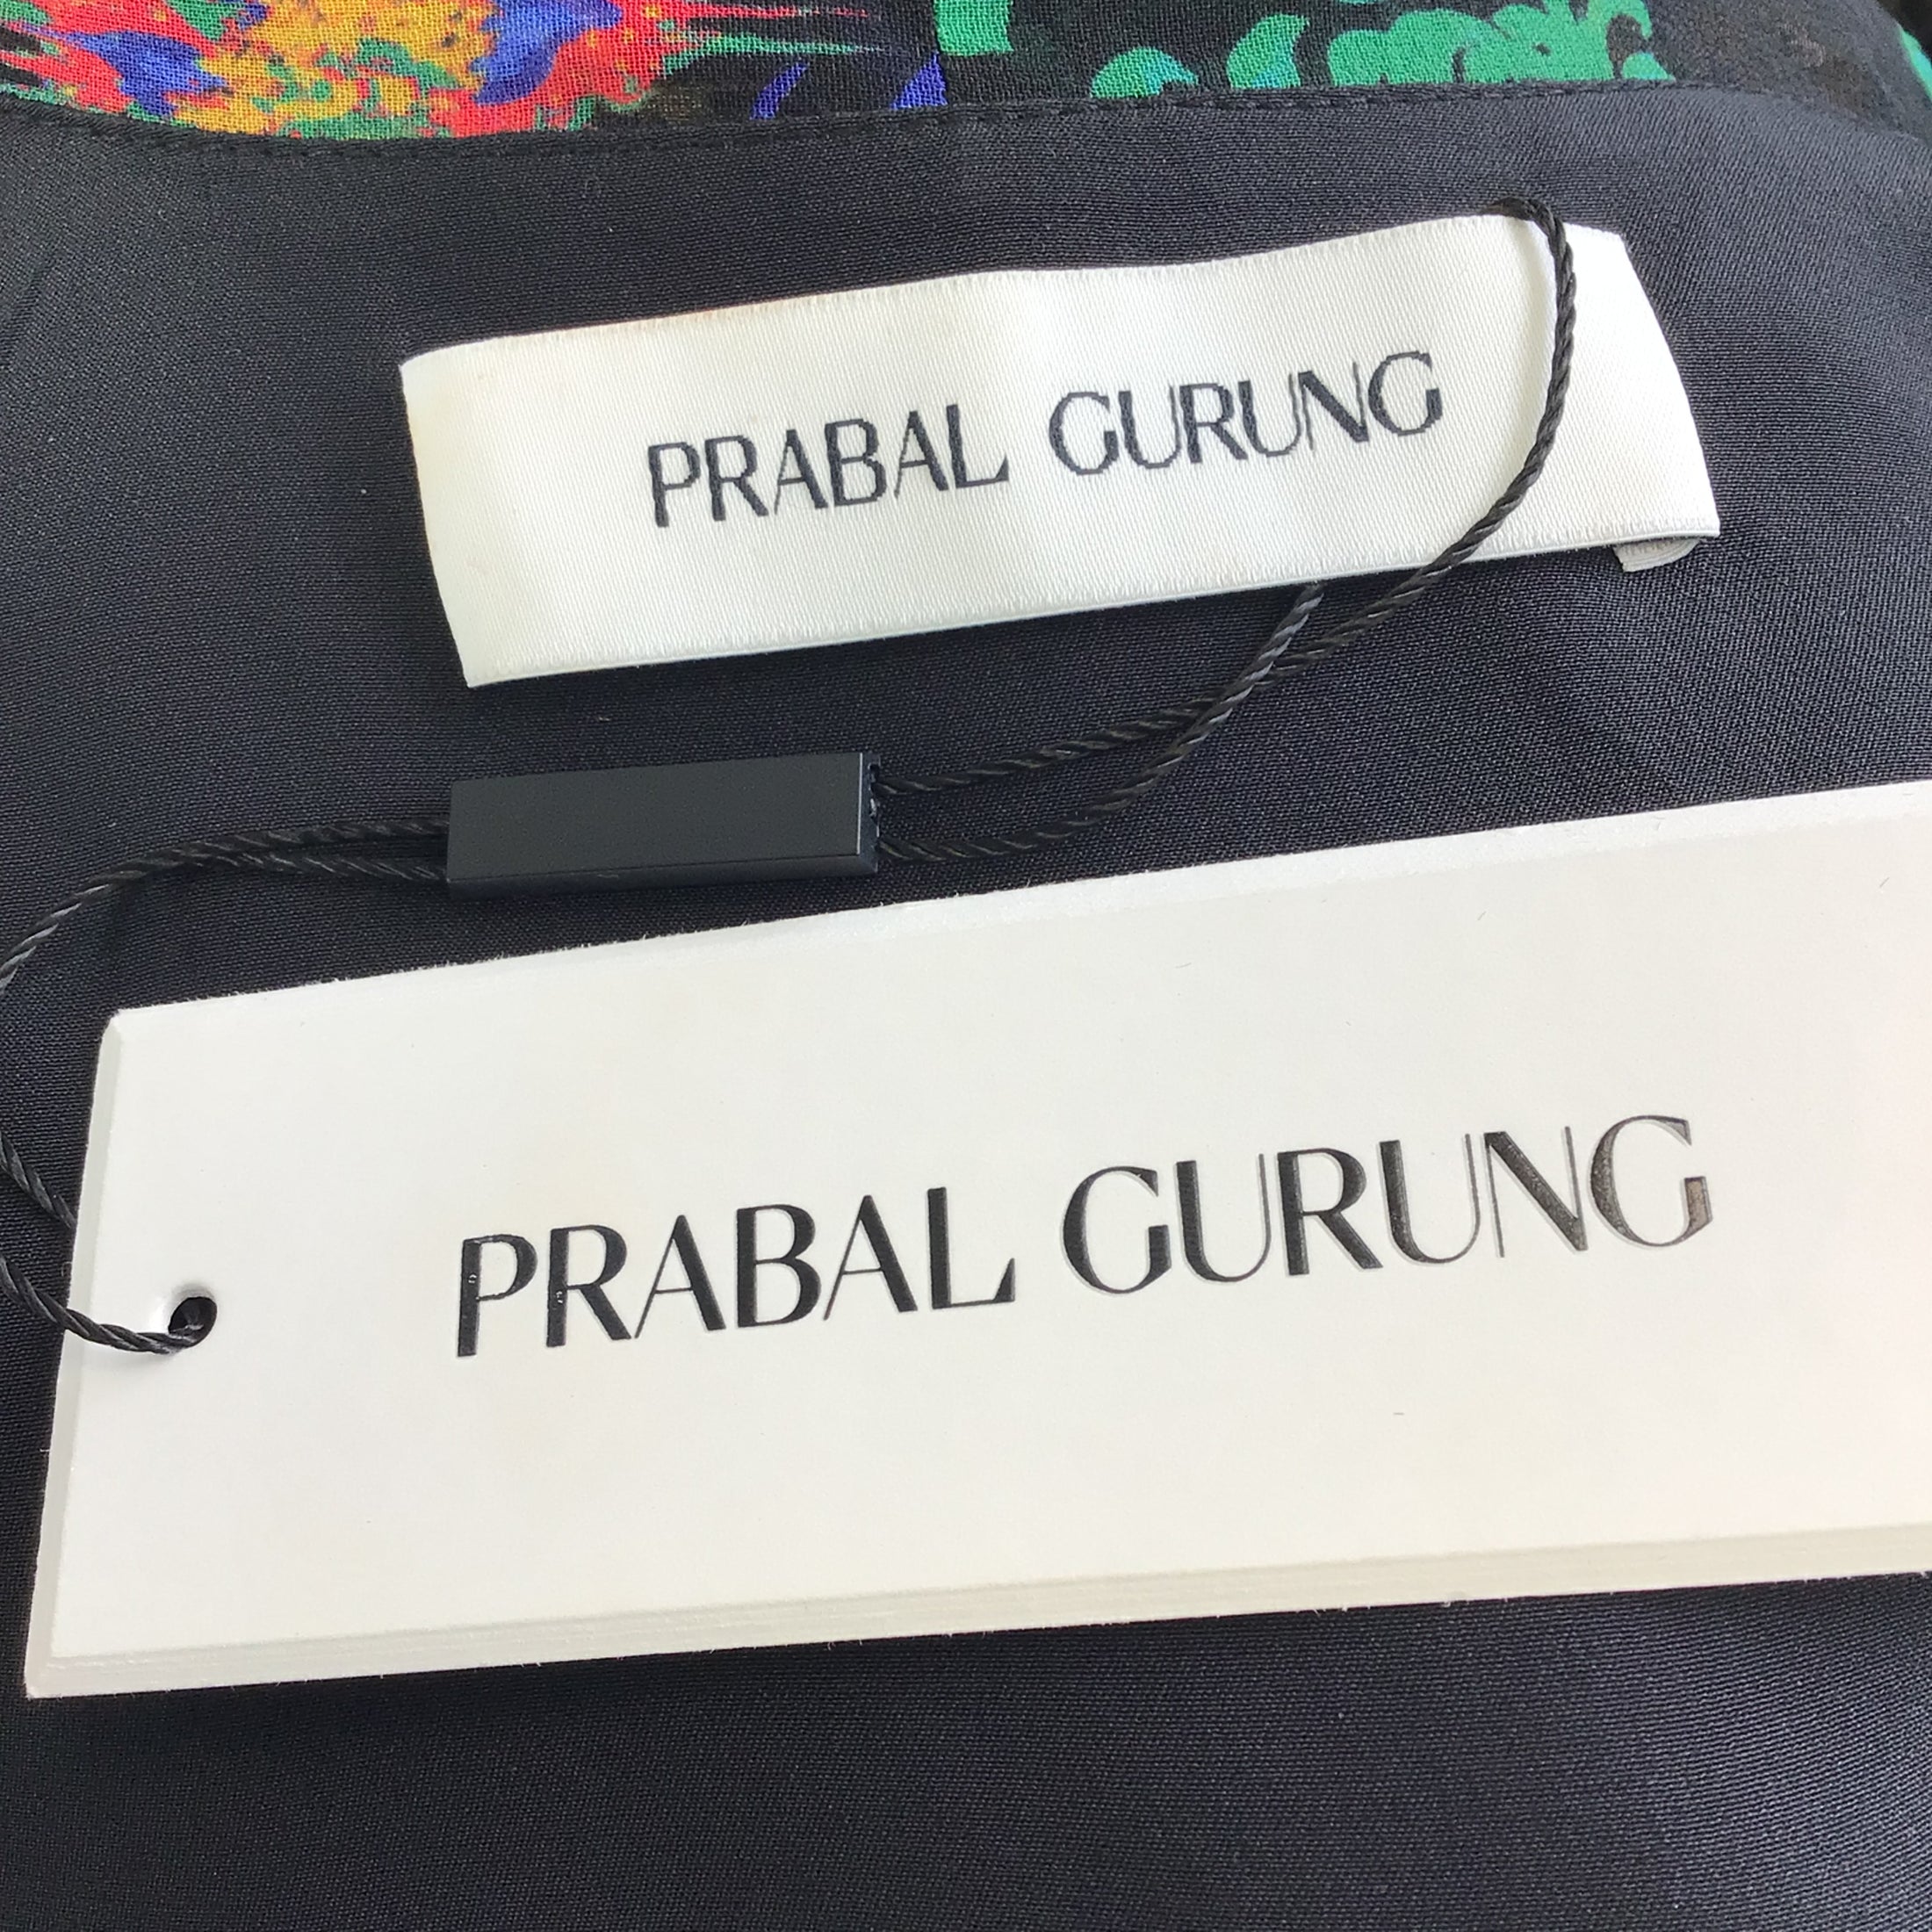 Prabal Gurung Black Multi Printed Lace Trimmed Tie-Neck Silk Dress